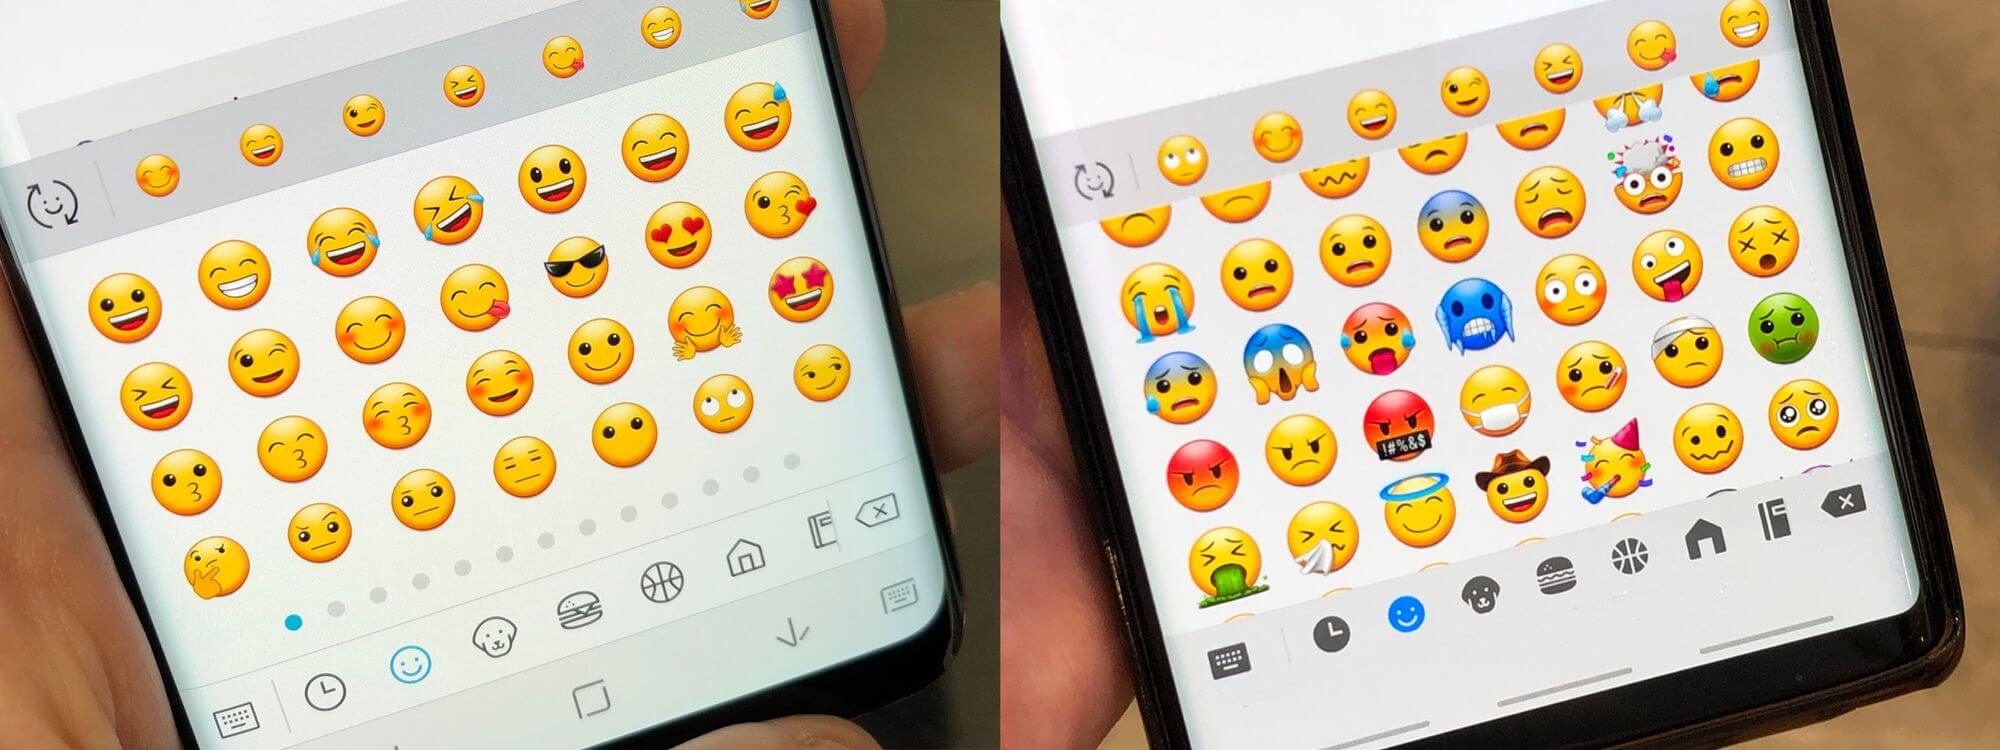 Fix Samsung S10 Won’t Send Emojis | Samsung send Questions mark